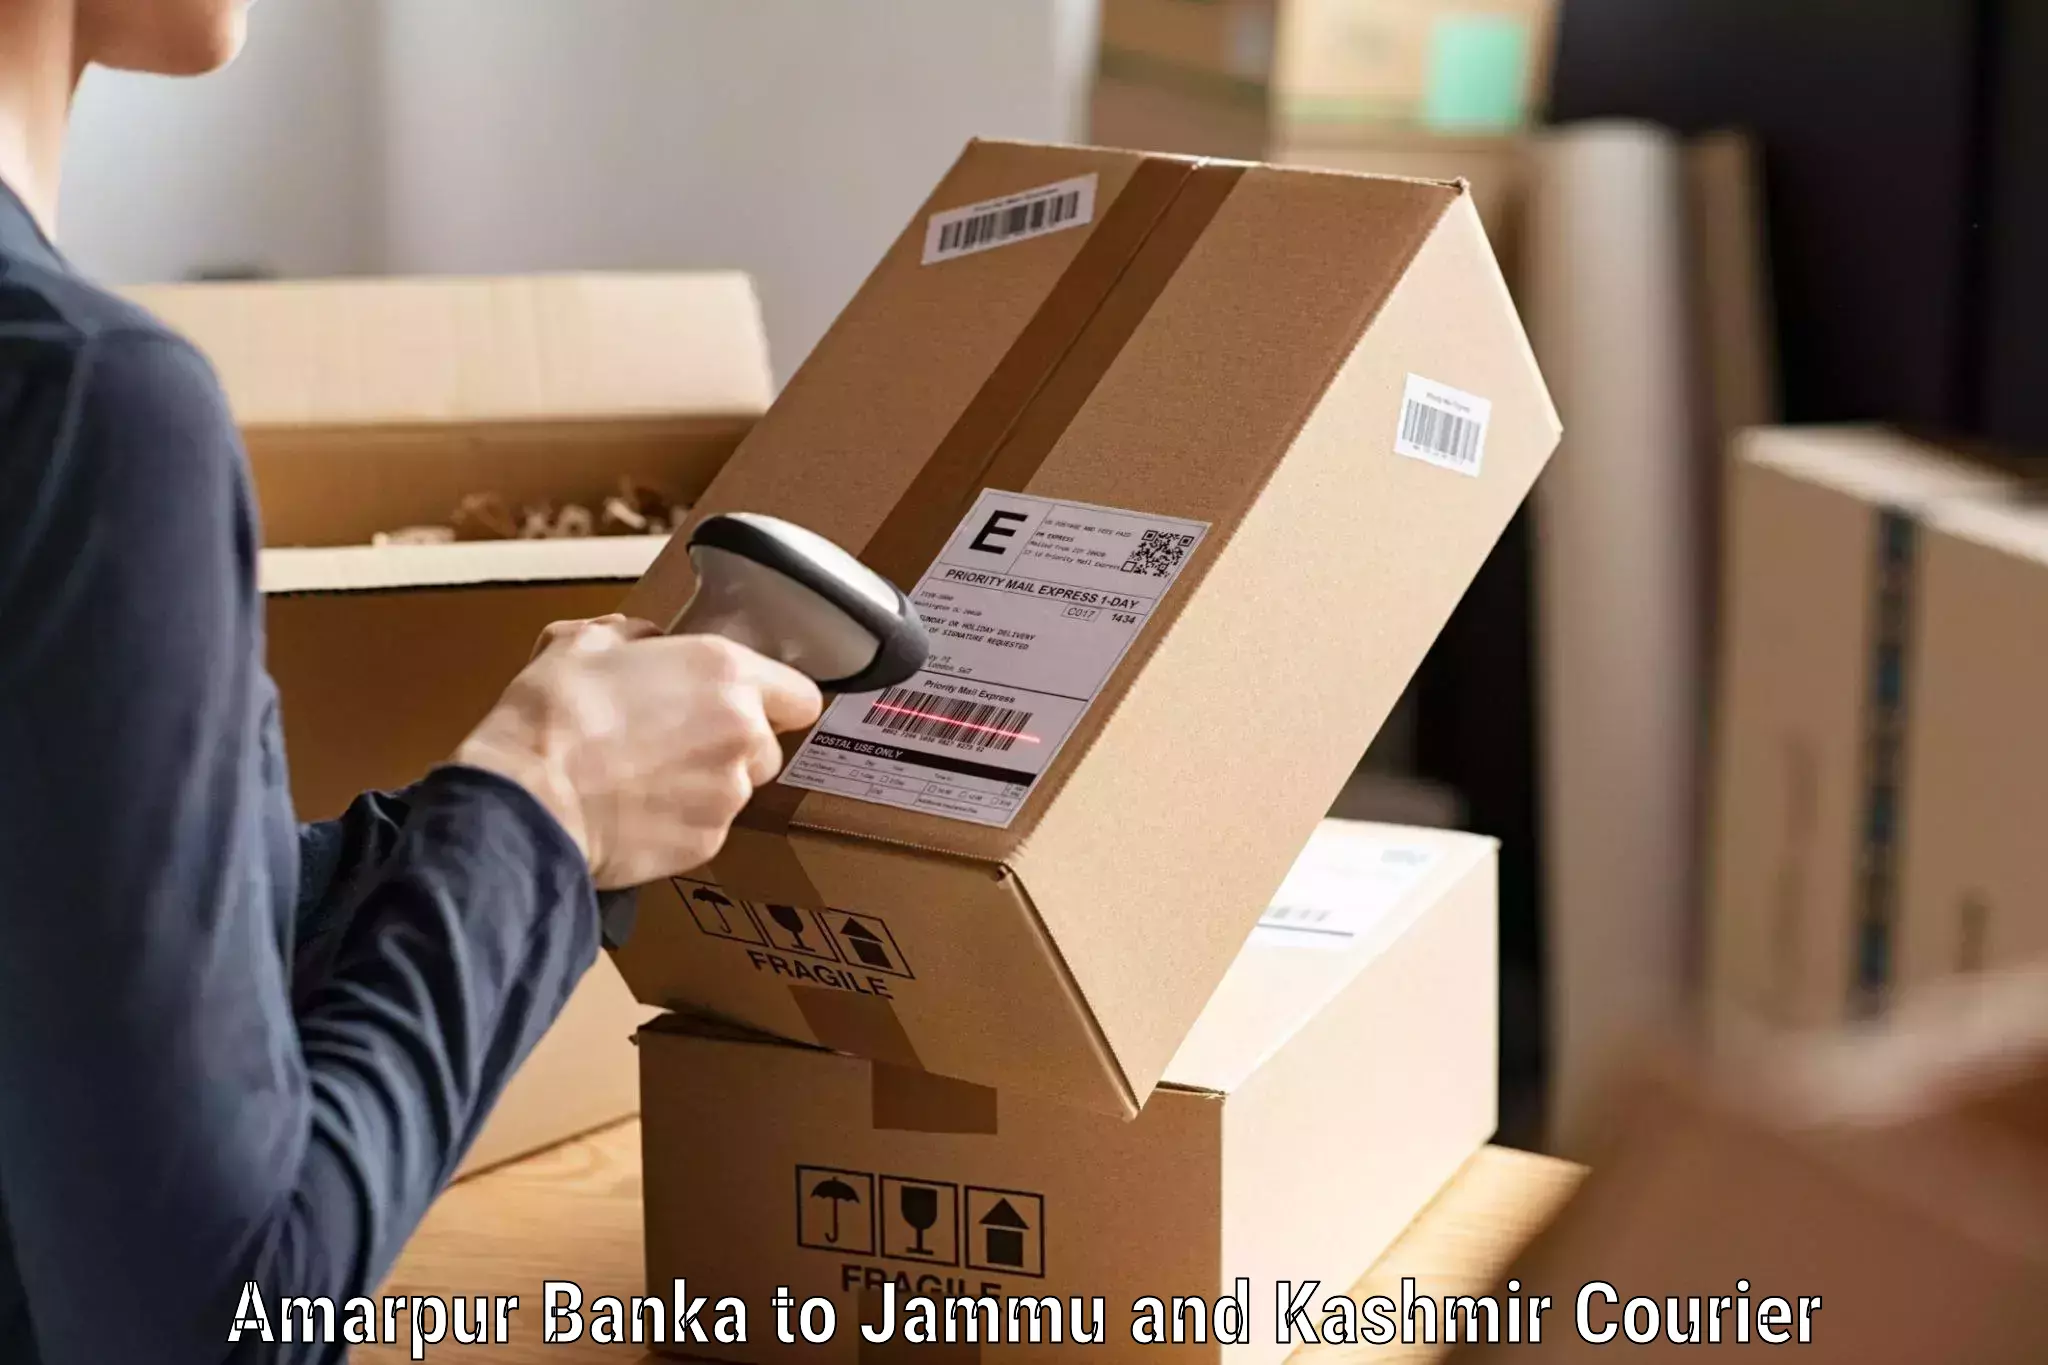 Courier service innovation Amarpur Banka to Baramulla